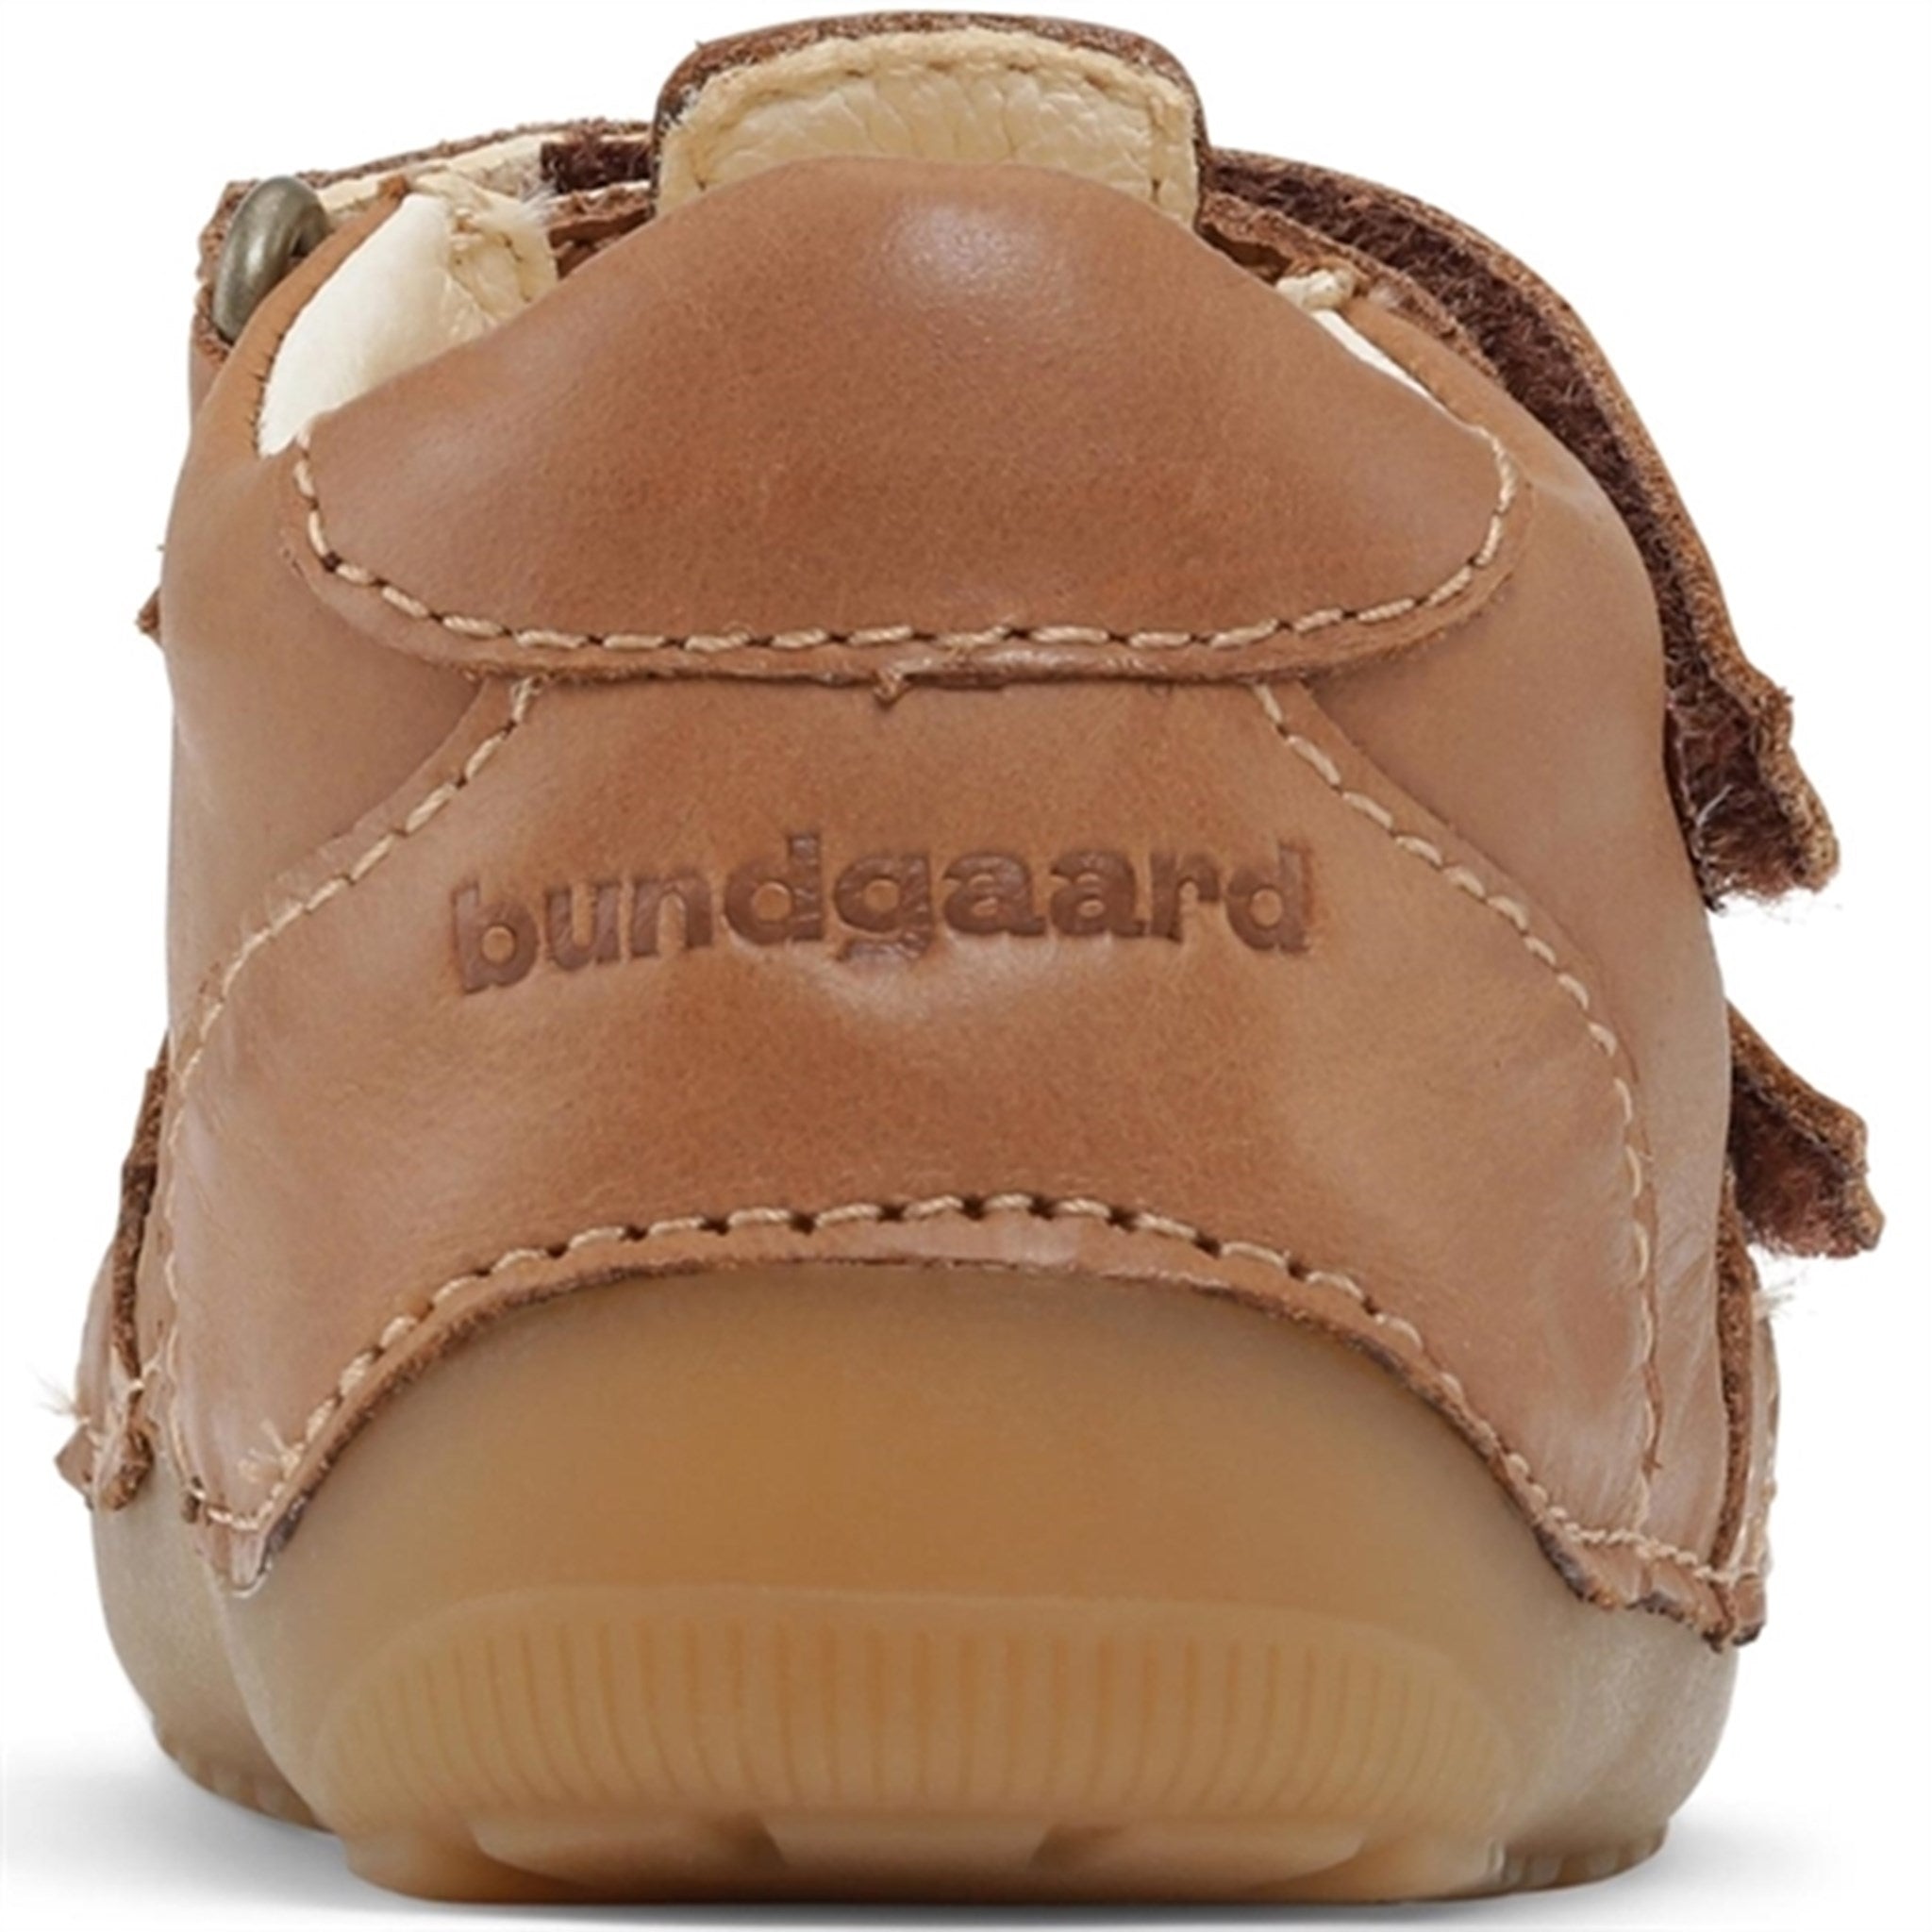 Bundgaard Petit Sandal Caramel 5